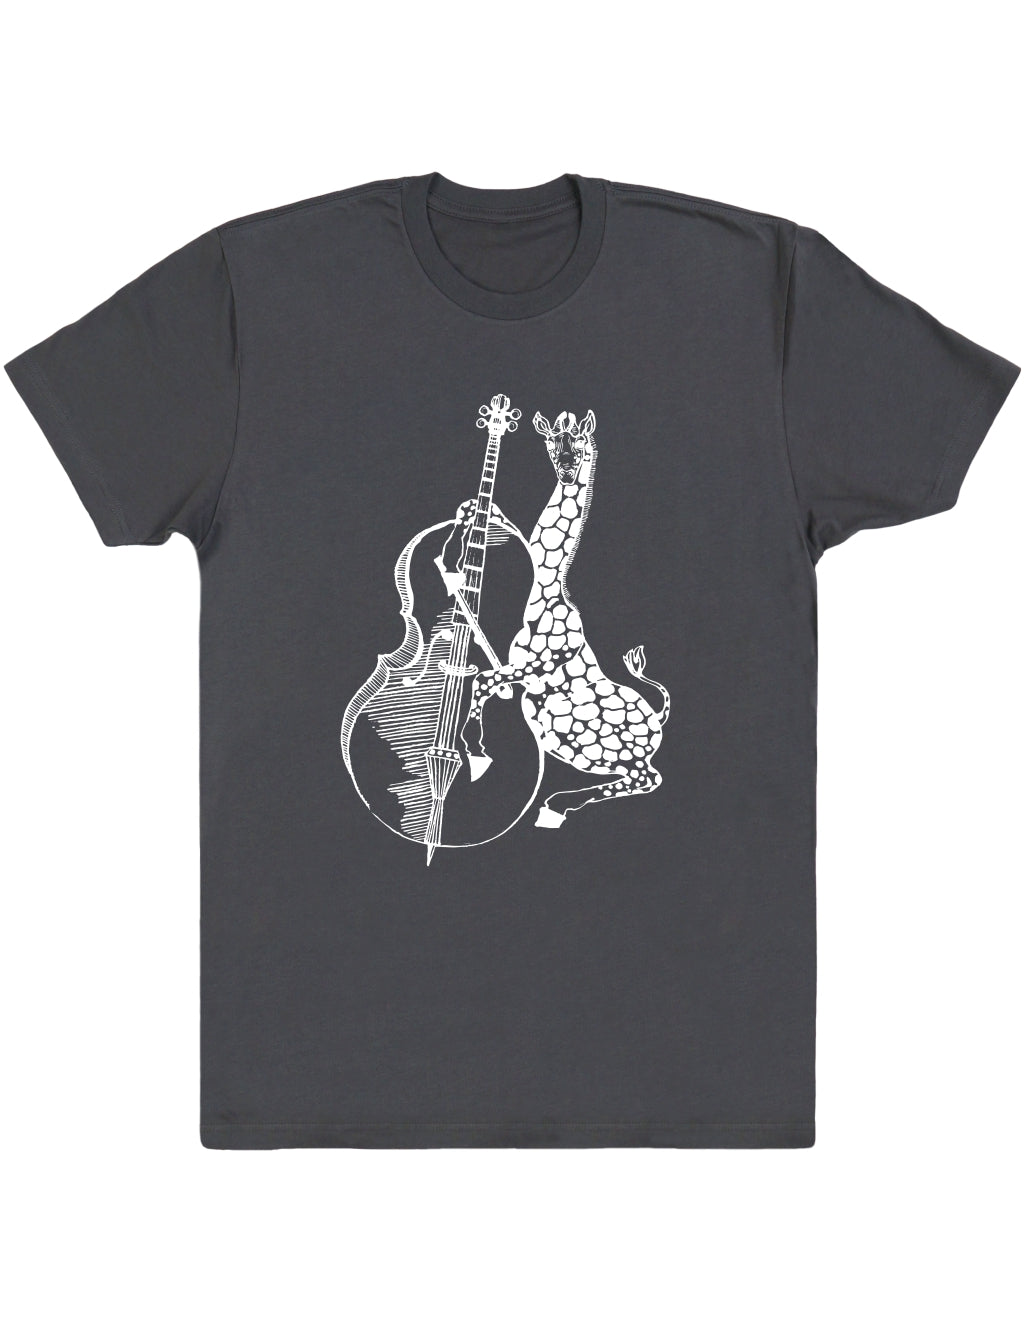 seembo-giraffe-playing-cello-design-on-an-asphalt-color-t-shirt